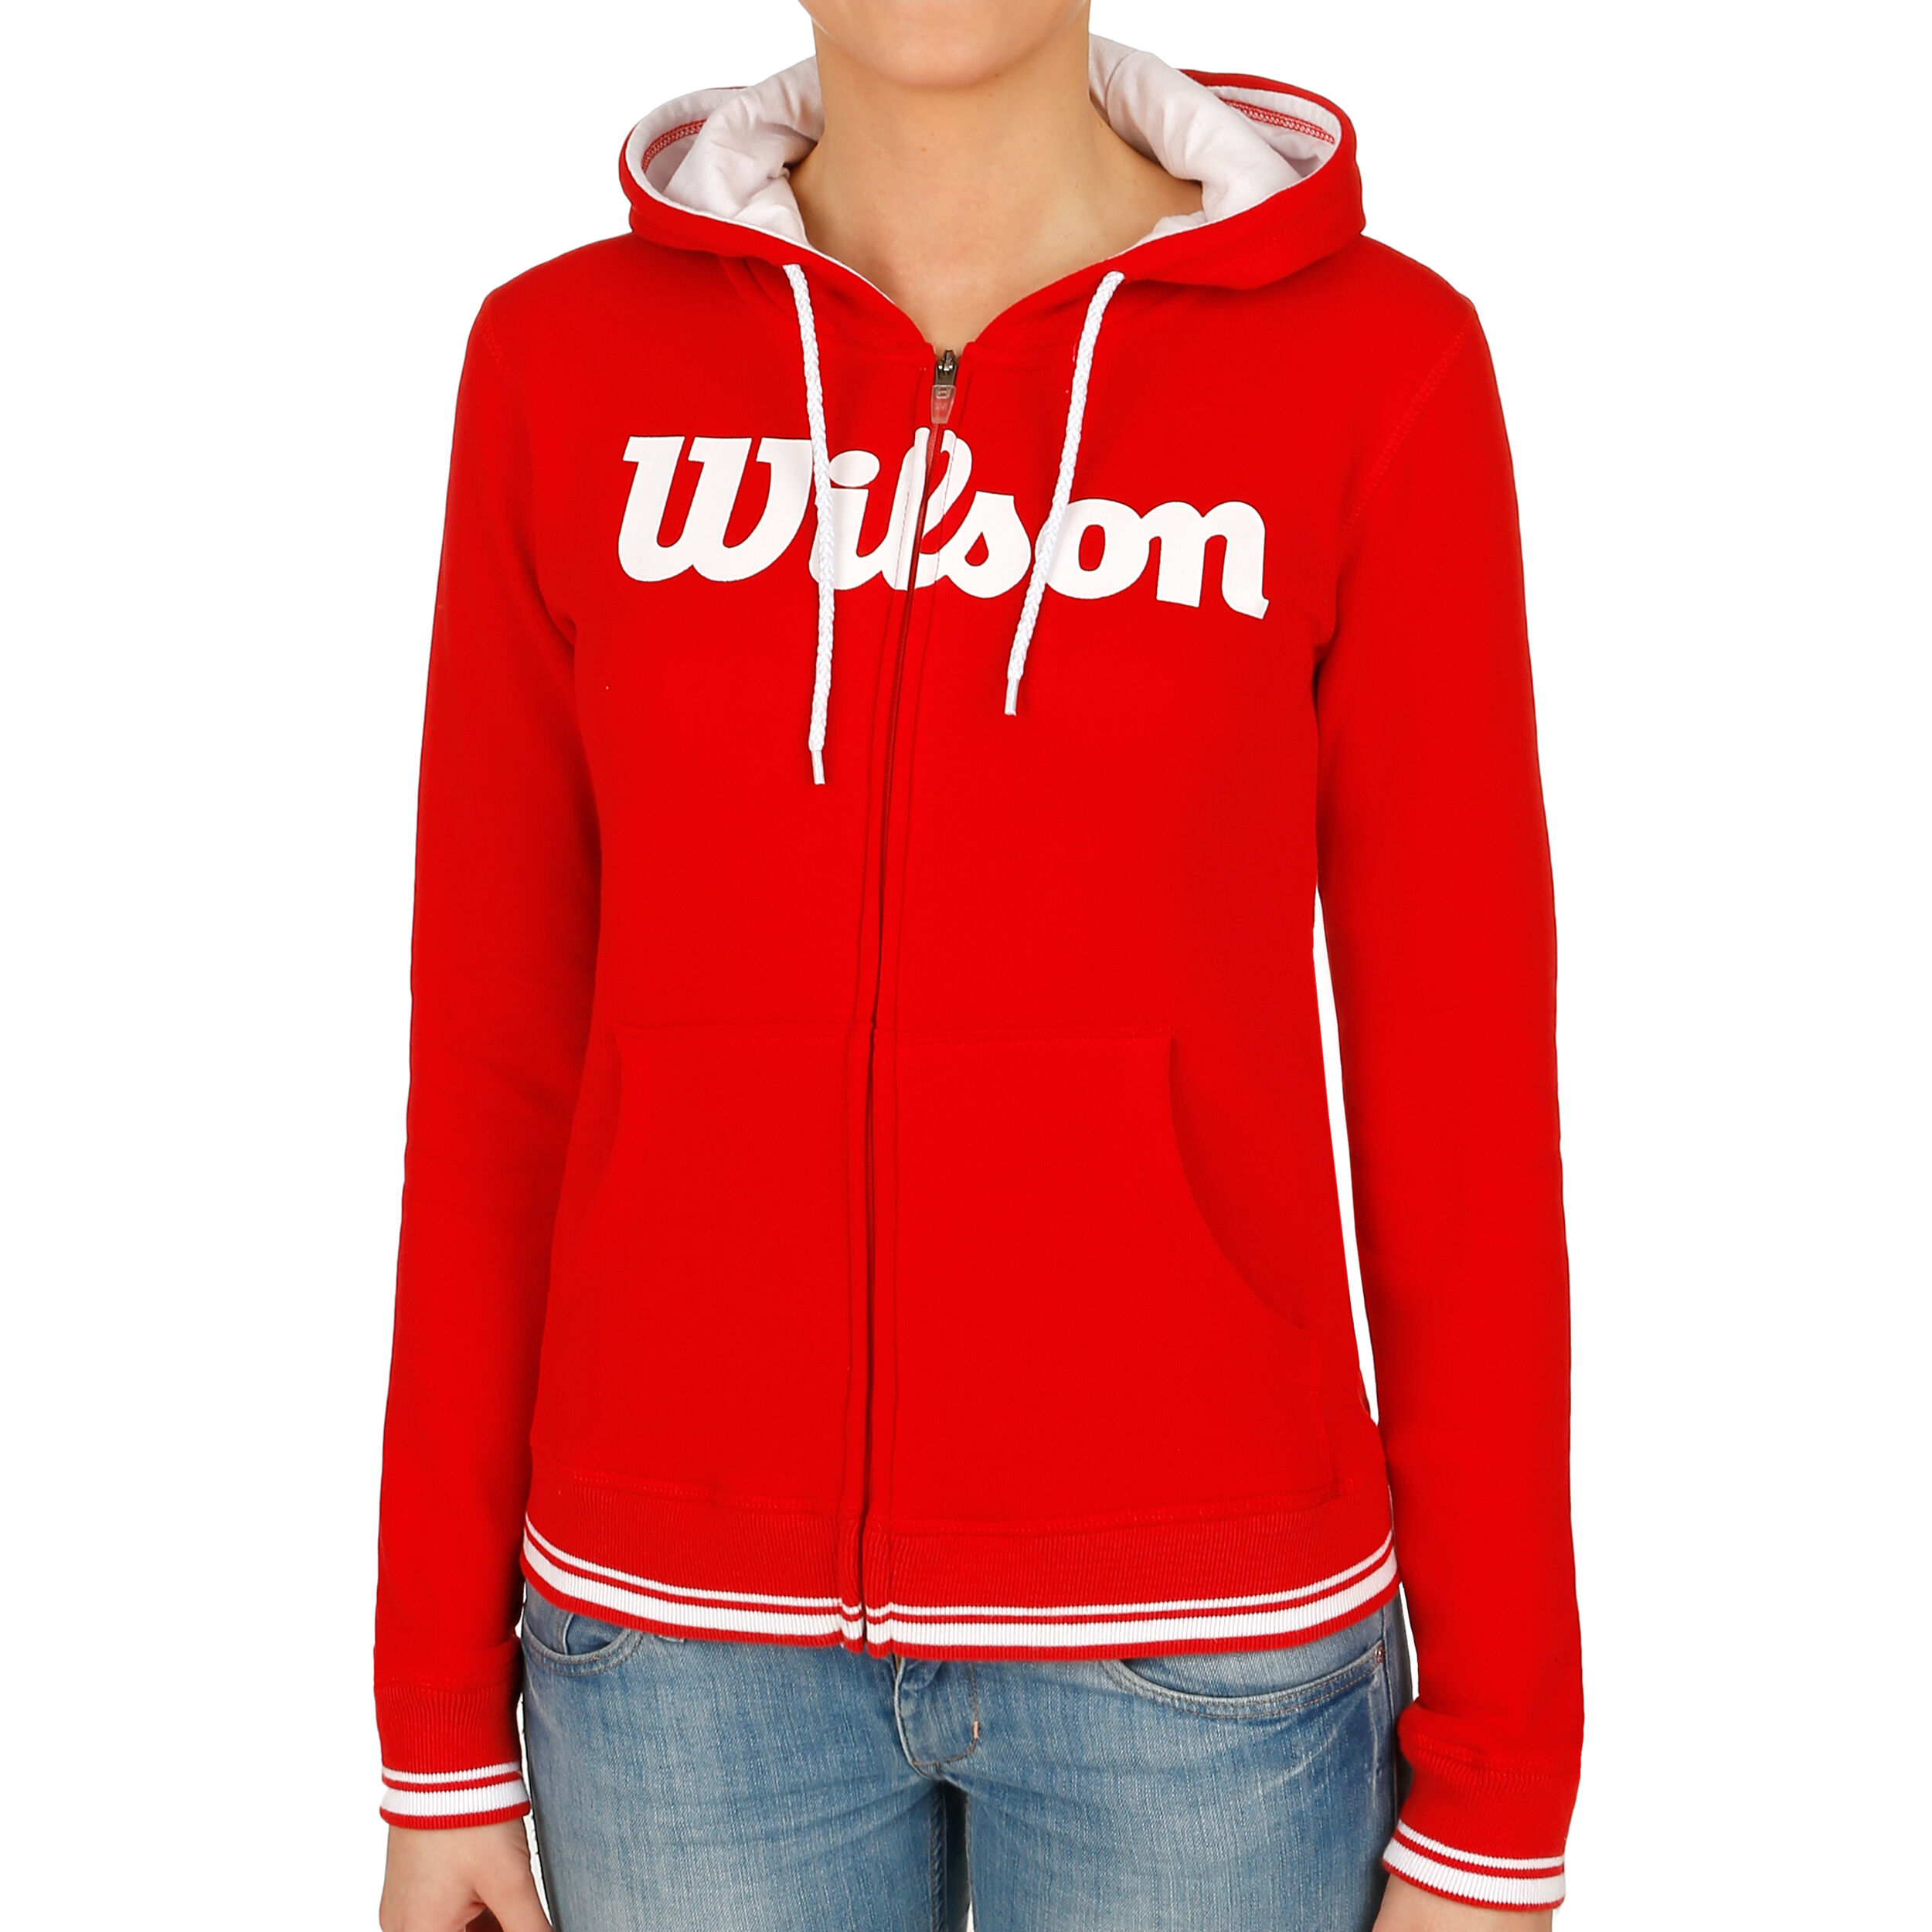 Wilson Womens Team Script Fullzip Hoody Sweat Jacket Red NEW 